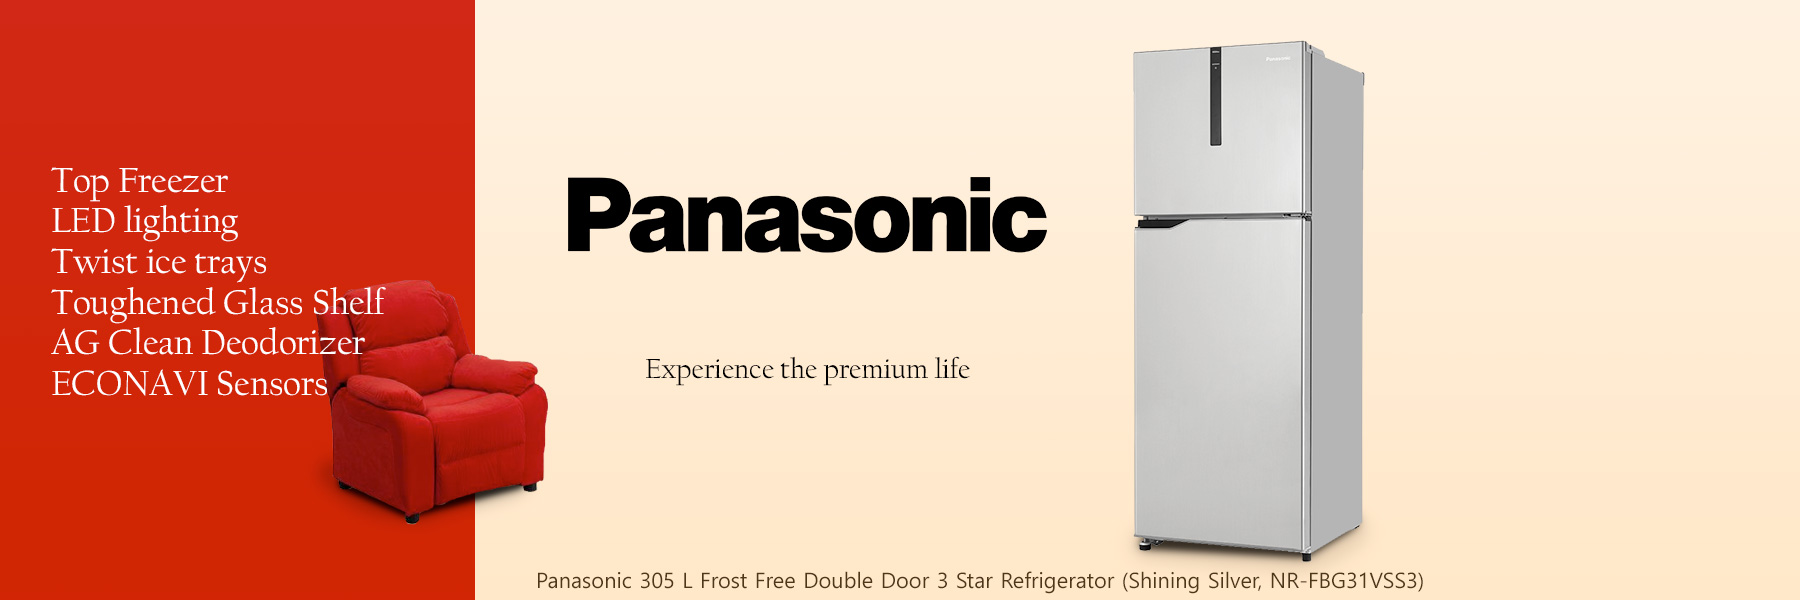 Panasonic 305 L Frost Free Double Door 3 Star Refrigerator (Shining Silver, NR-FBG31VSS3)